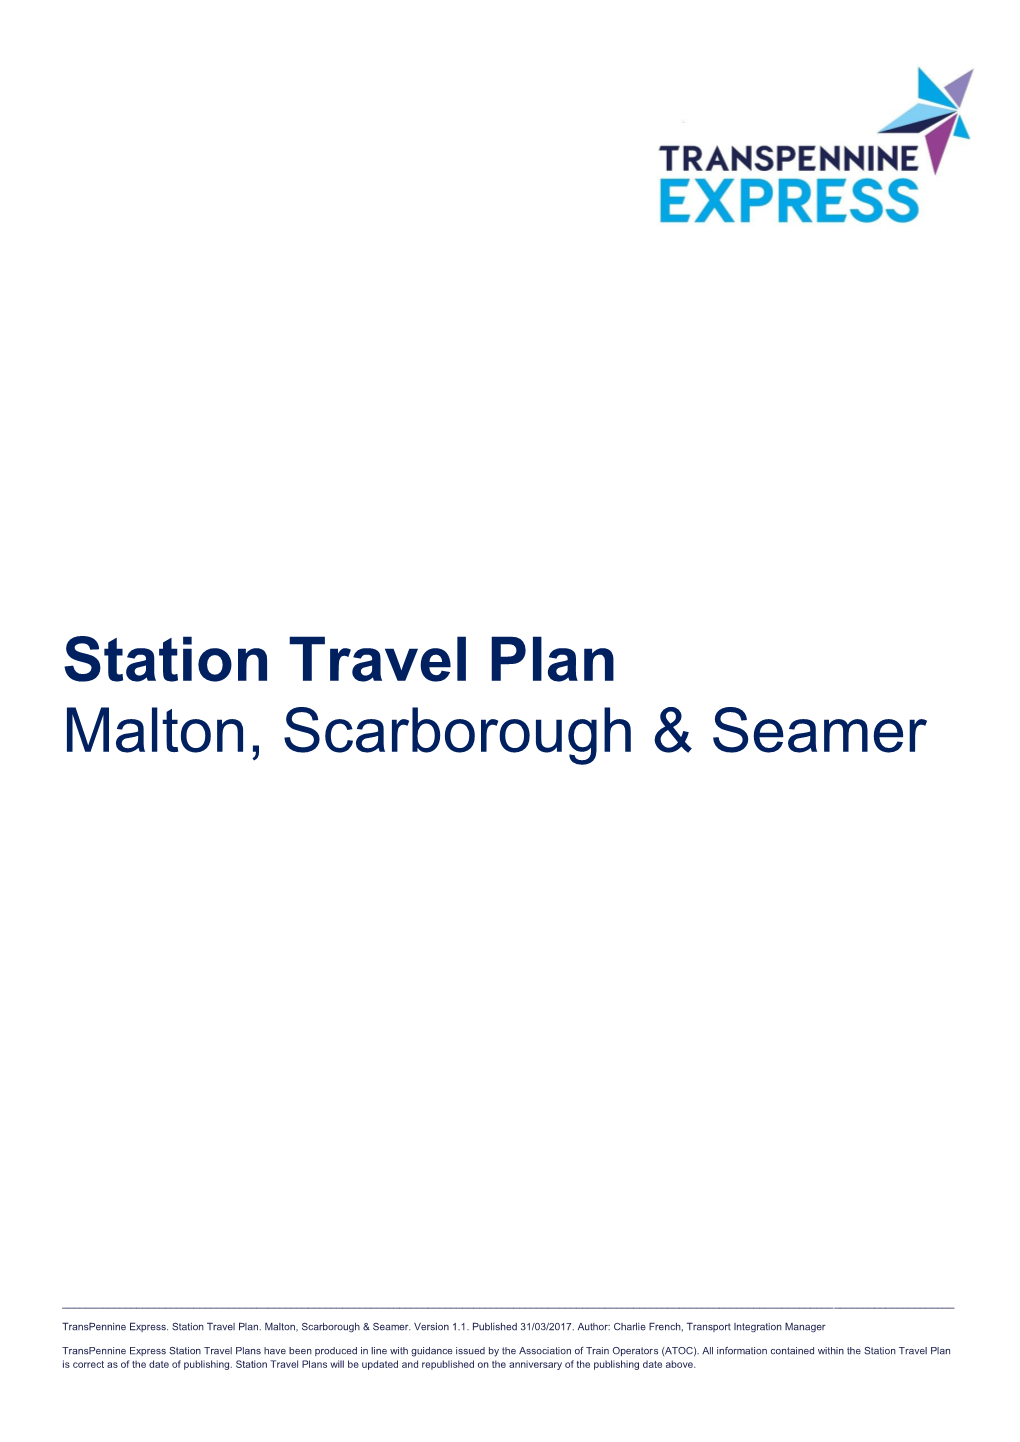 Station Travel Plan Malton, Scarborough & Seamer